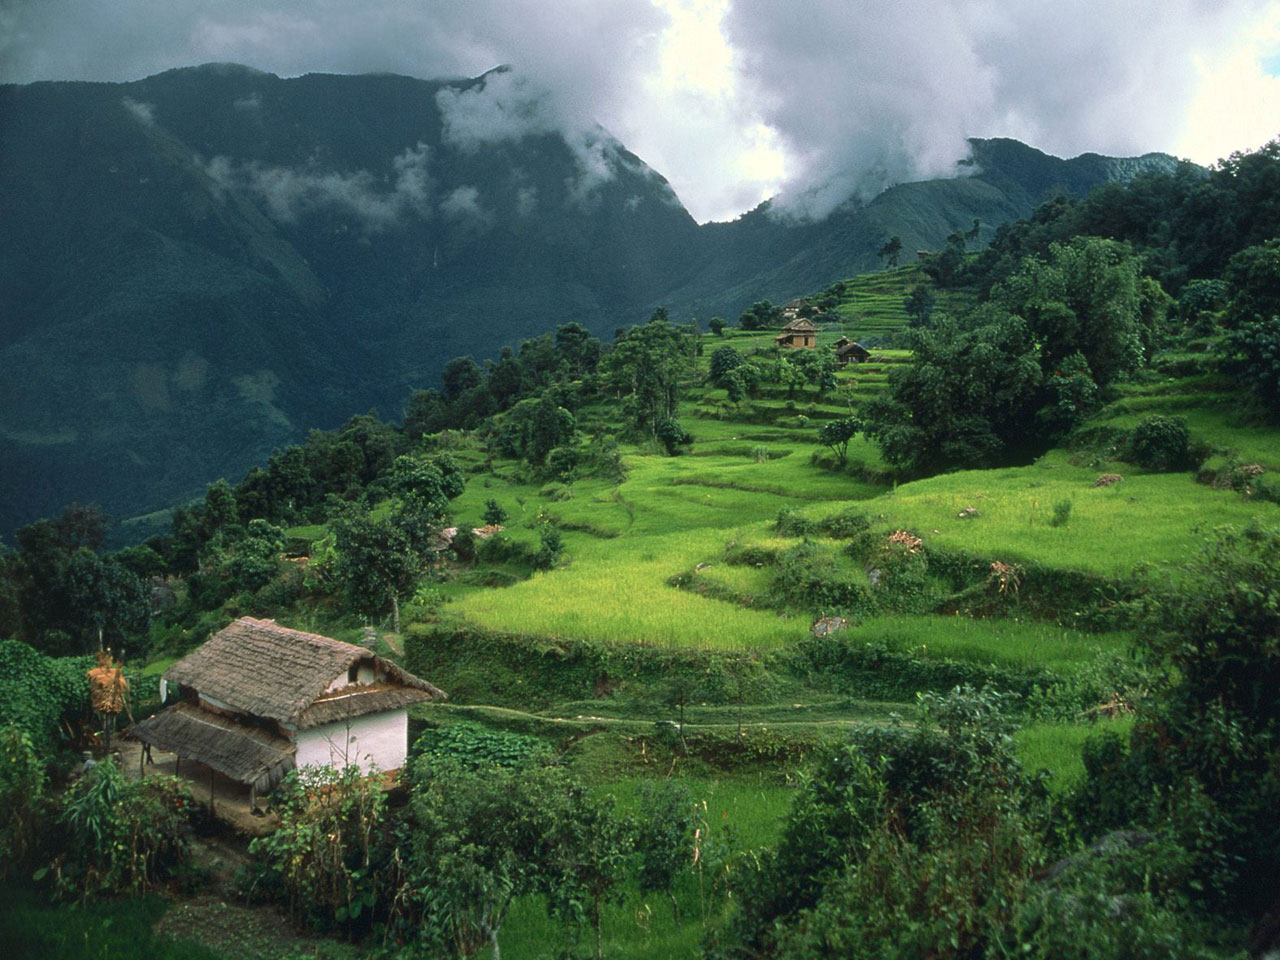 http://4.bp.blogspot.com/_fd4CLh8AbAg/S8NTd0mPGUI/AAAAAAAAASQ/3_ssmnxTyro/s1600/Arun_River_Region_Nepal.jpg